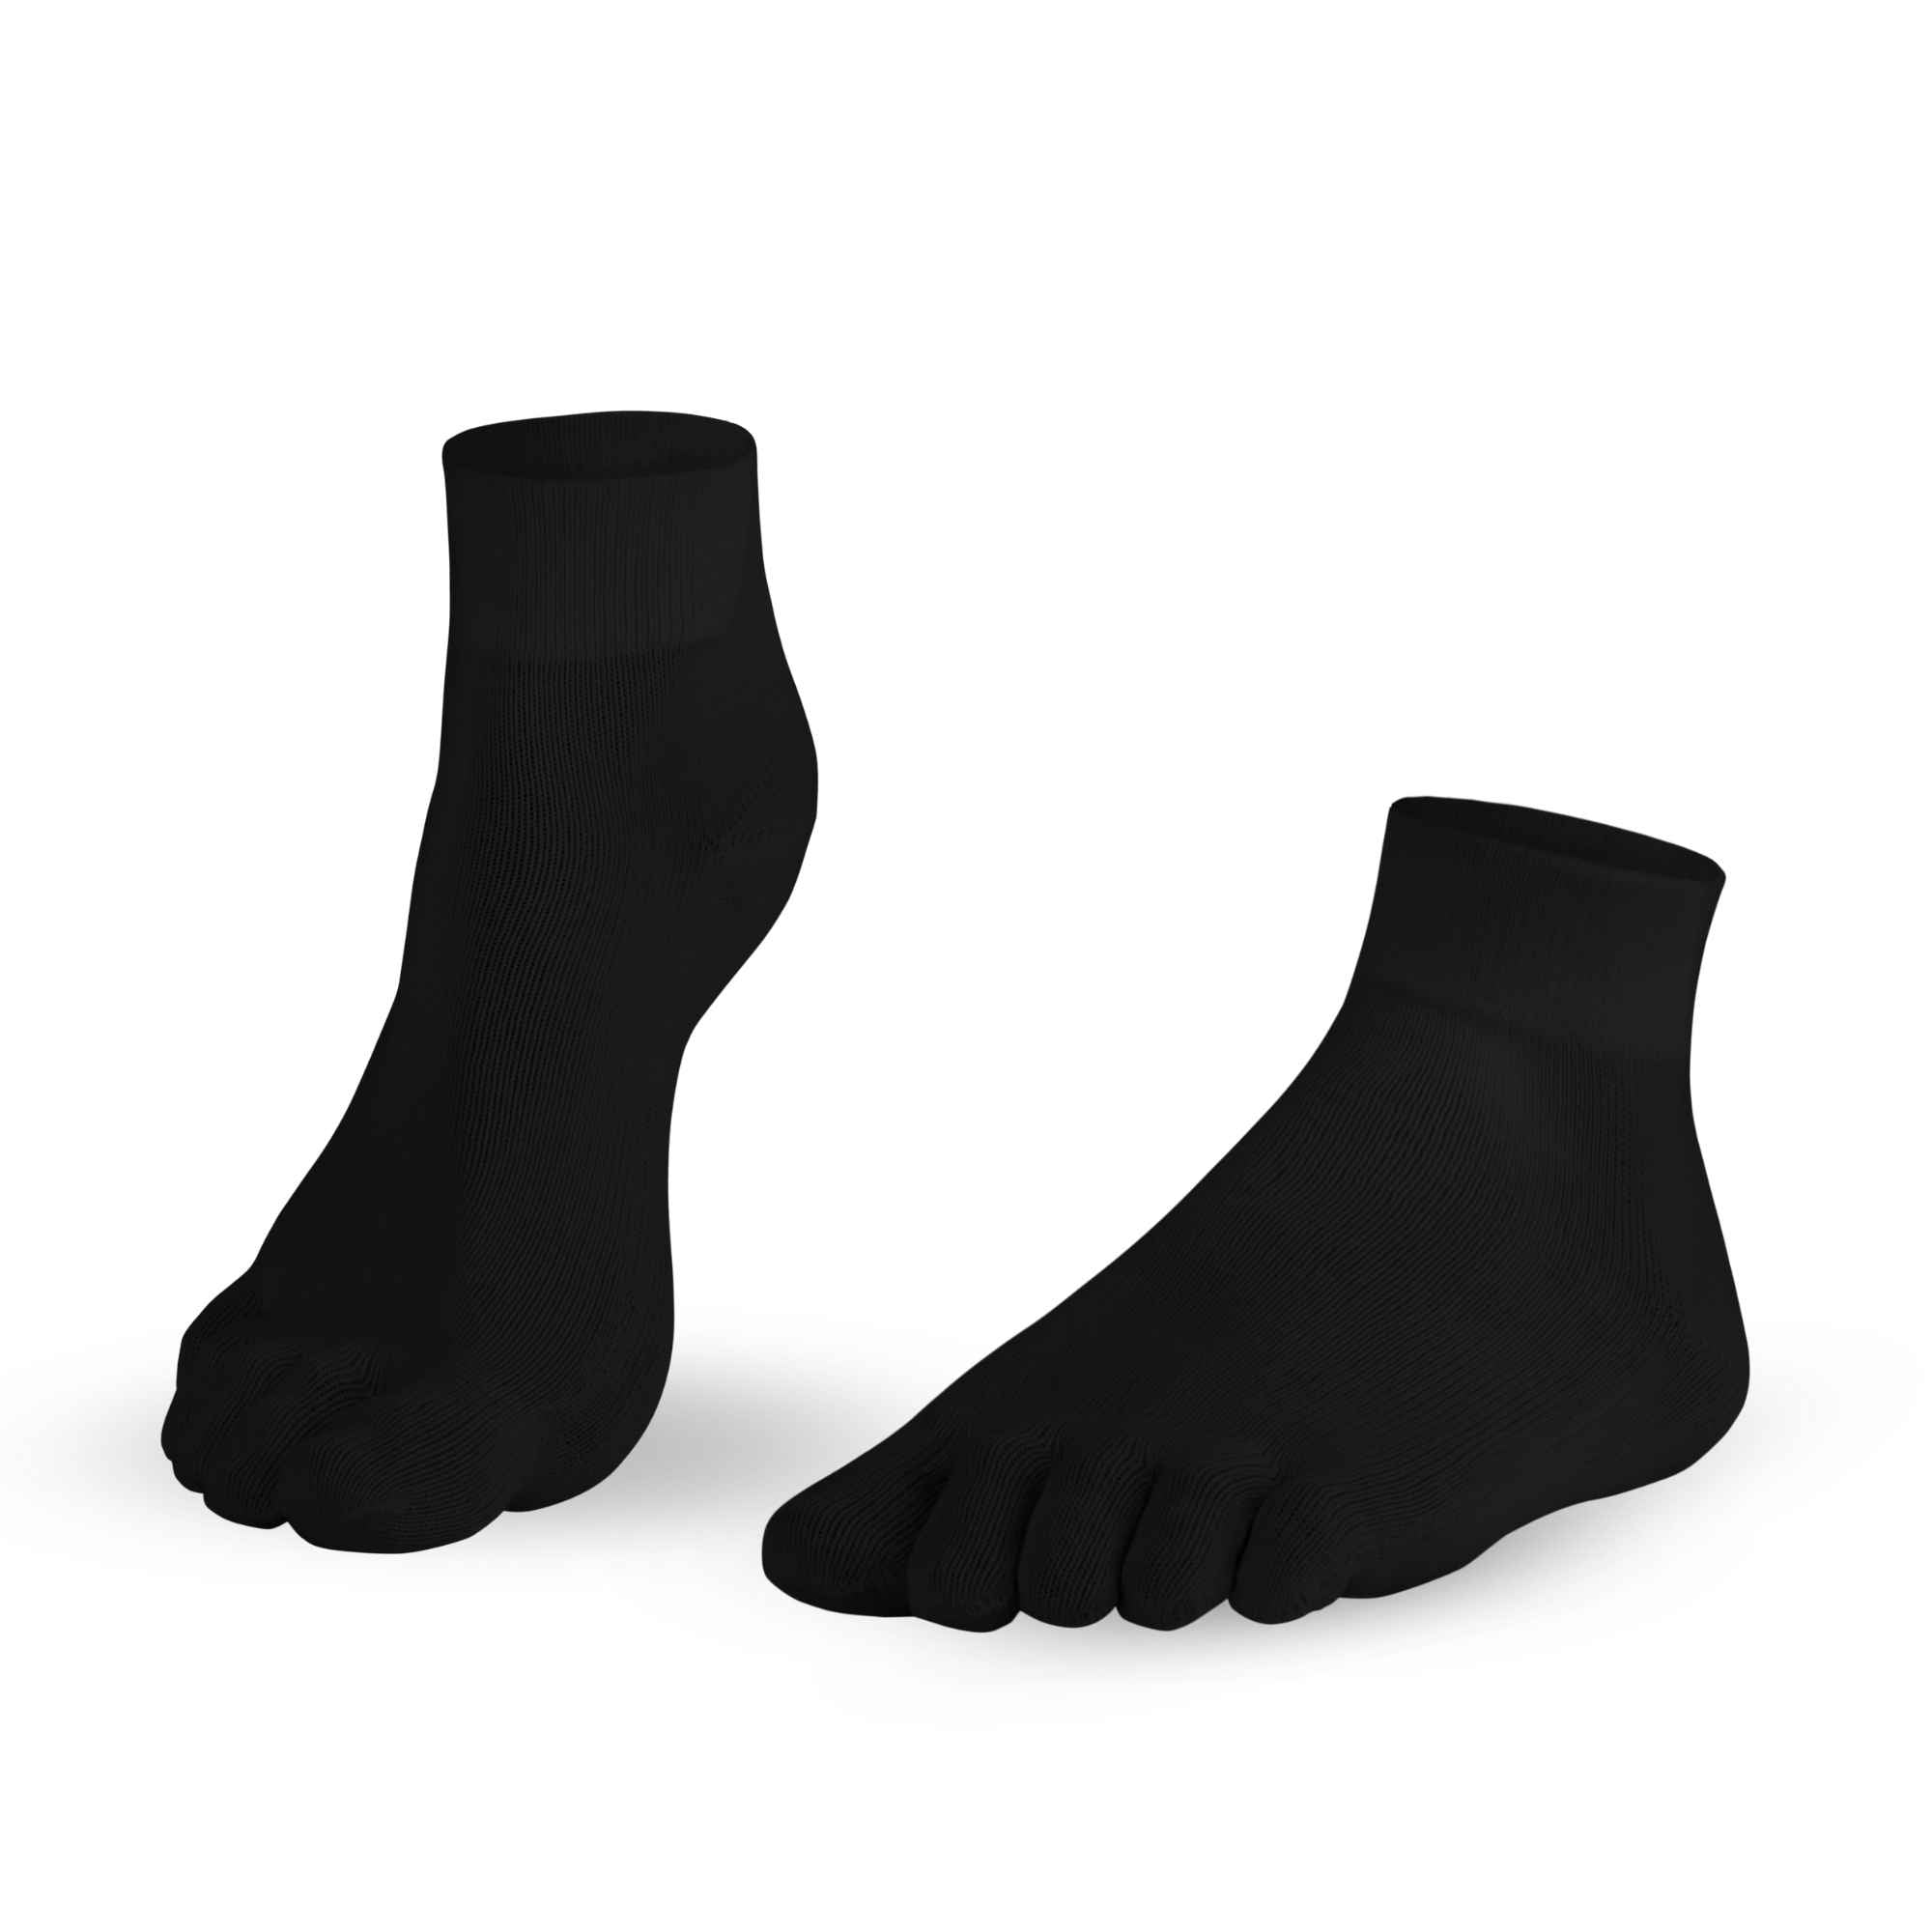 Silver Protect short socks, 3pcs economy pack - Knitido®.